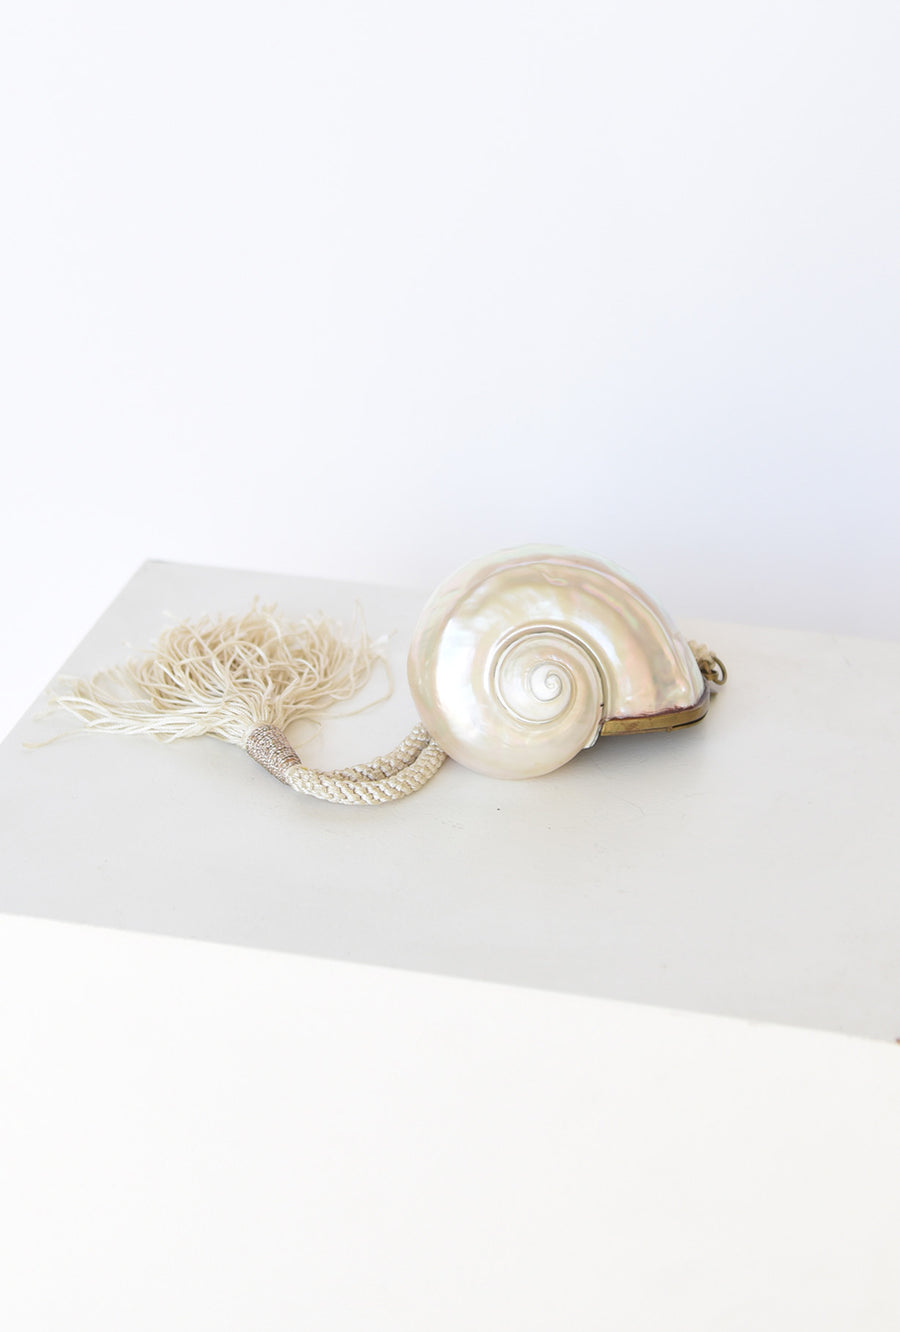 KAMPERETT Vintage Seashell Clutch